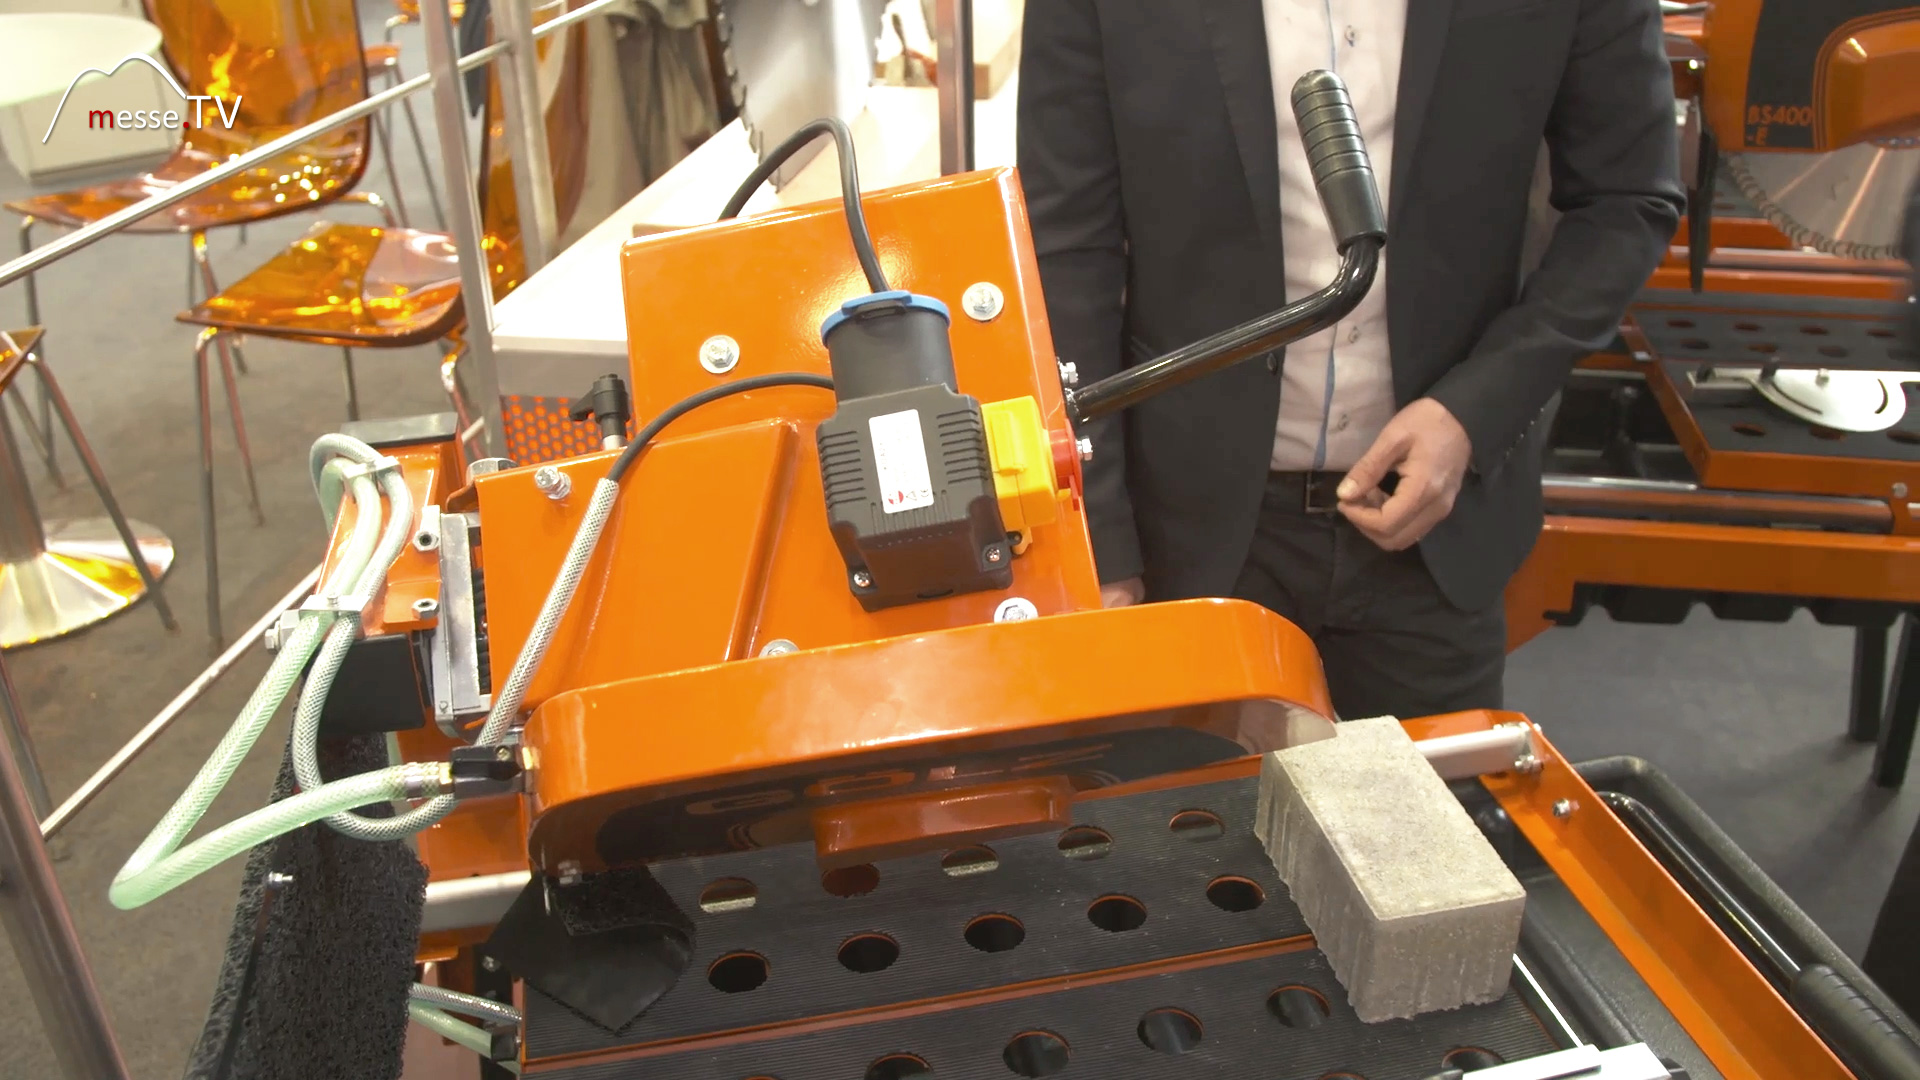 Goelz stone cutting machine adjustable up to 45 degrees bauma trade fair